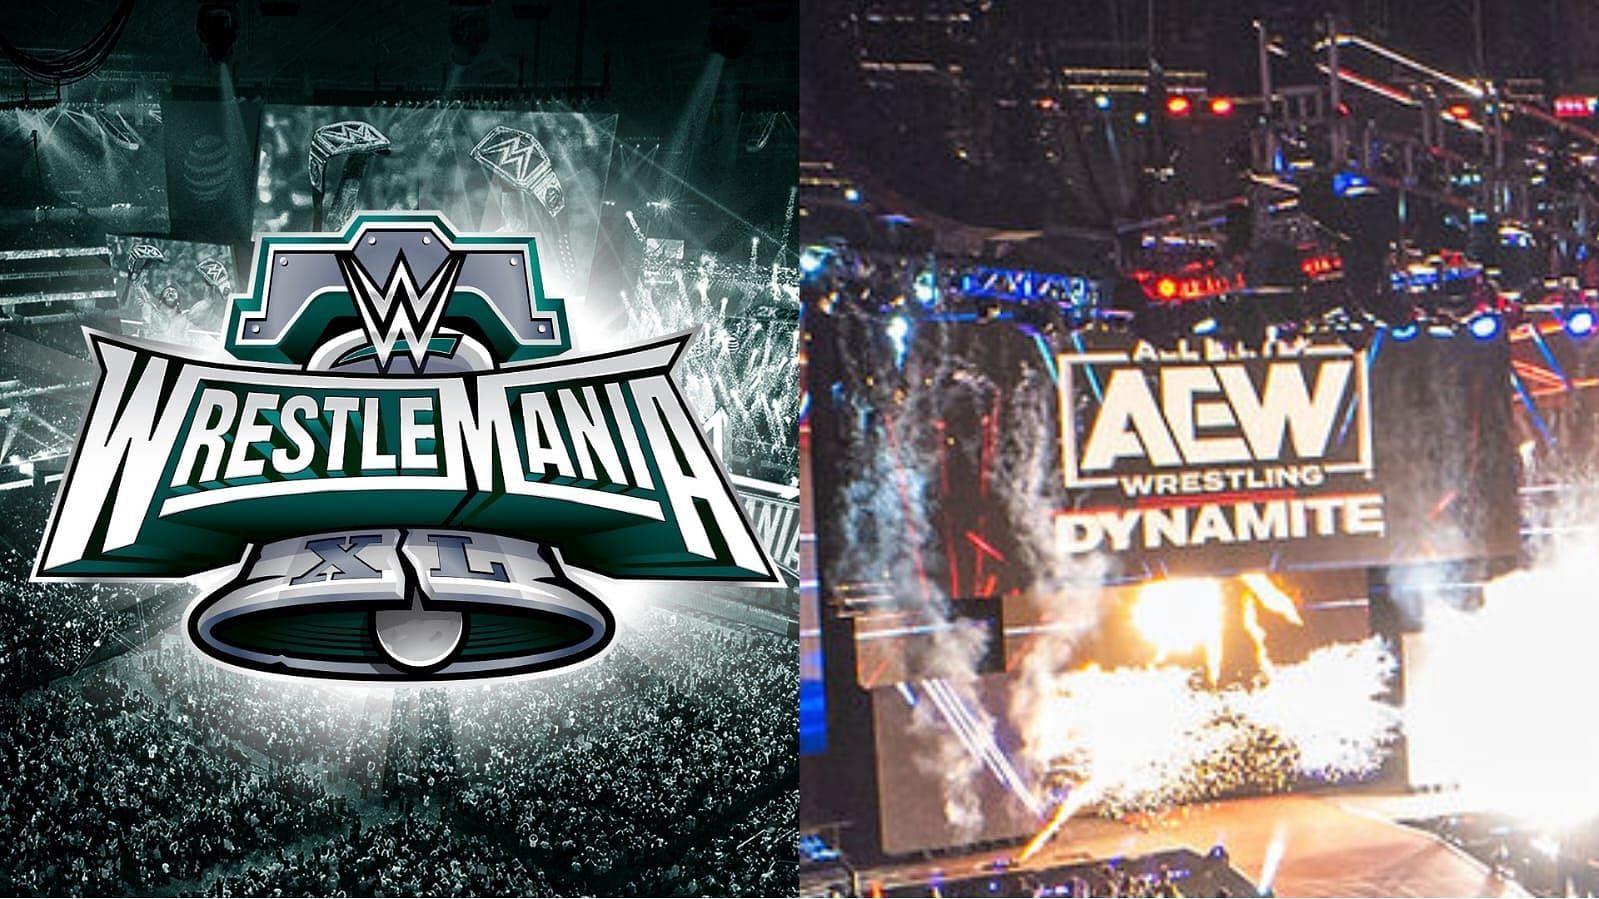 WrestleMania 40 will take place in Philidelphia